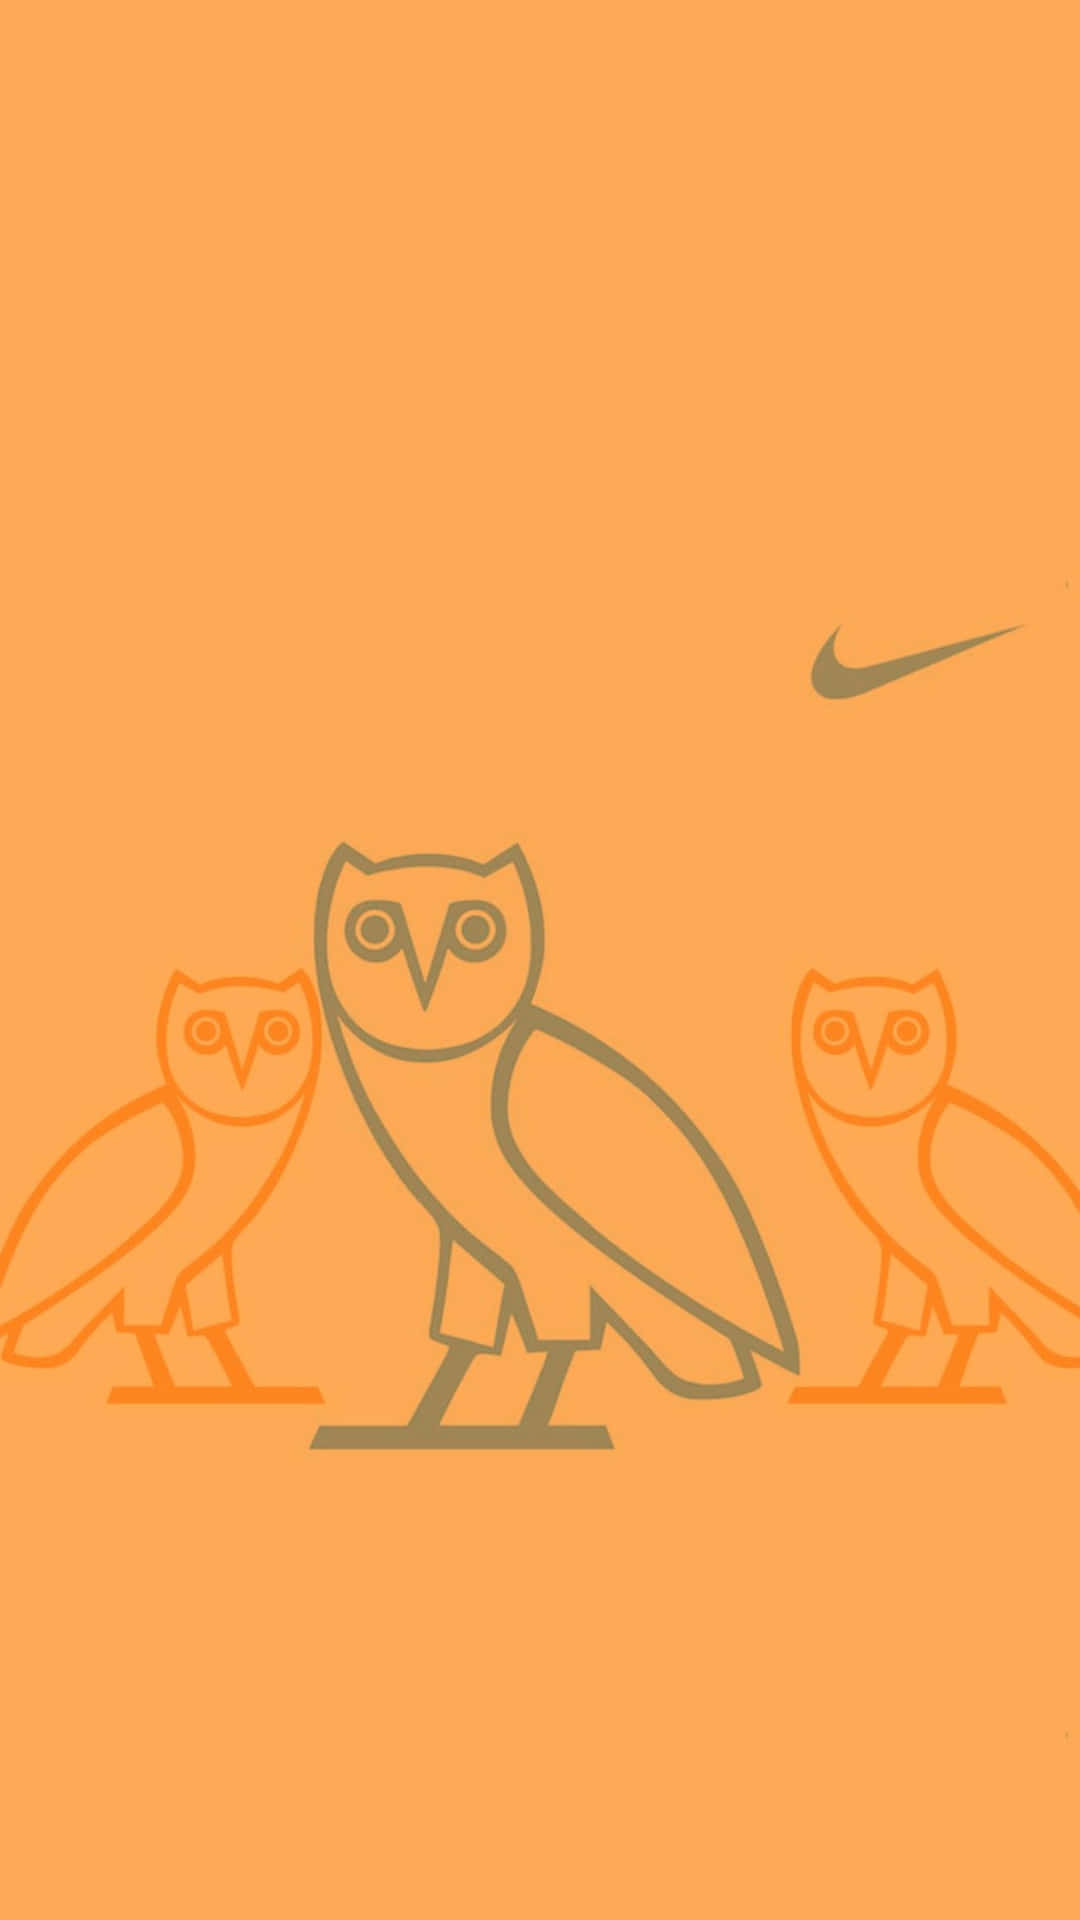 Download Drake Ovo Owl Iphone Wallpaper 